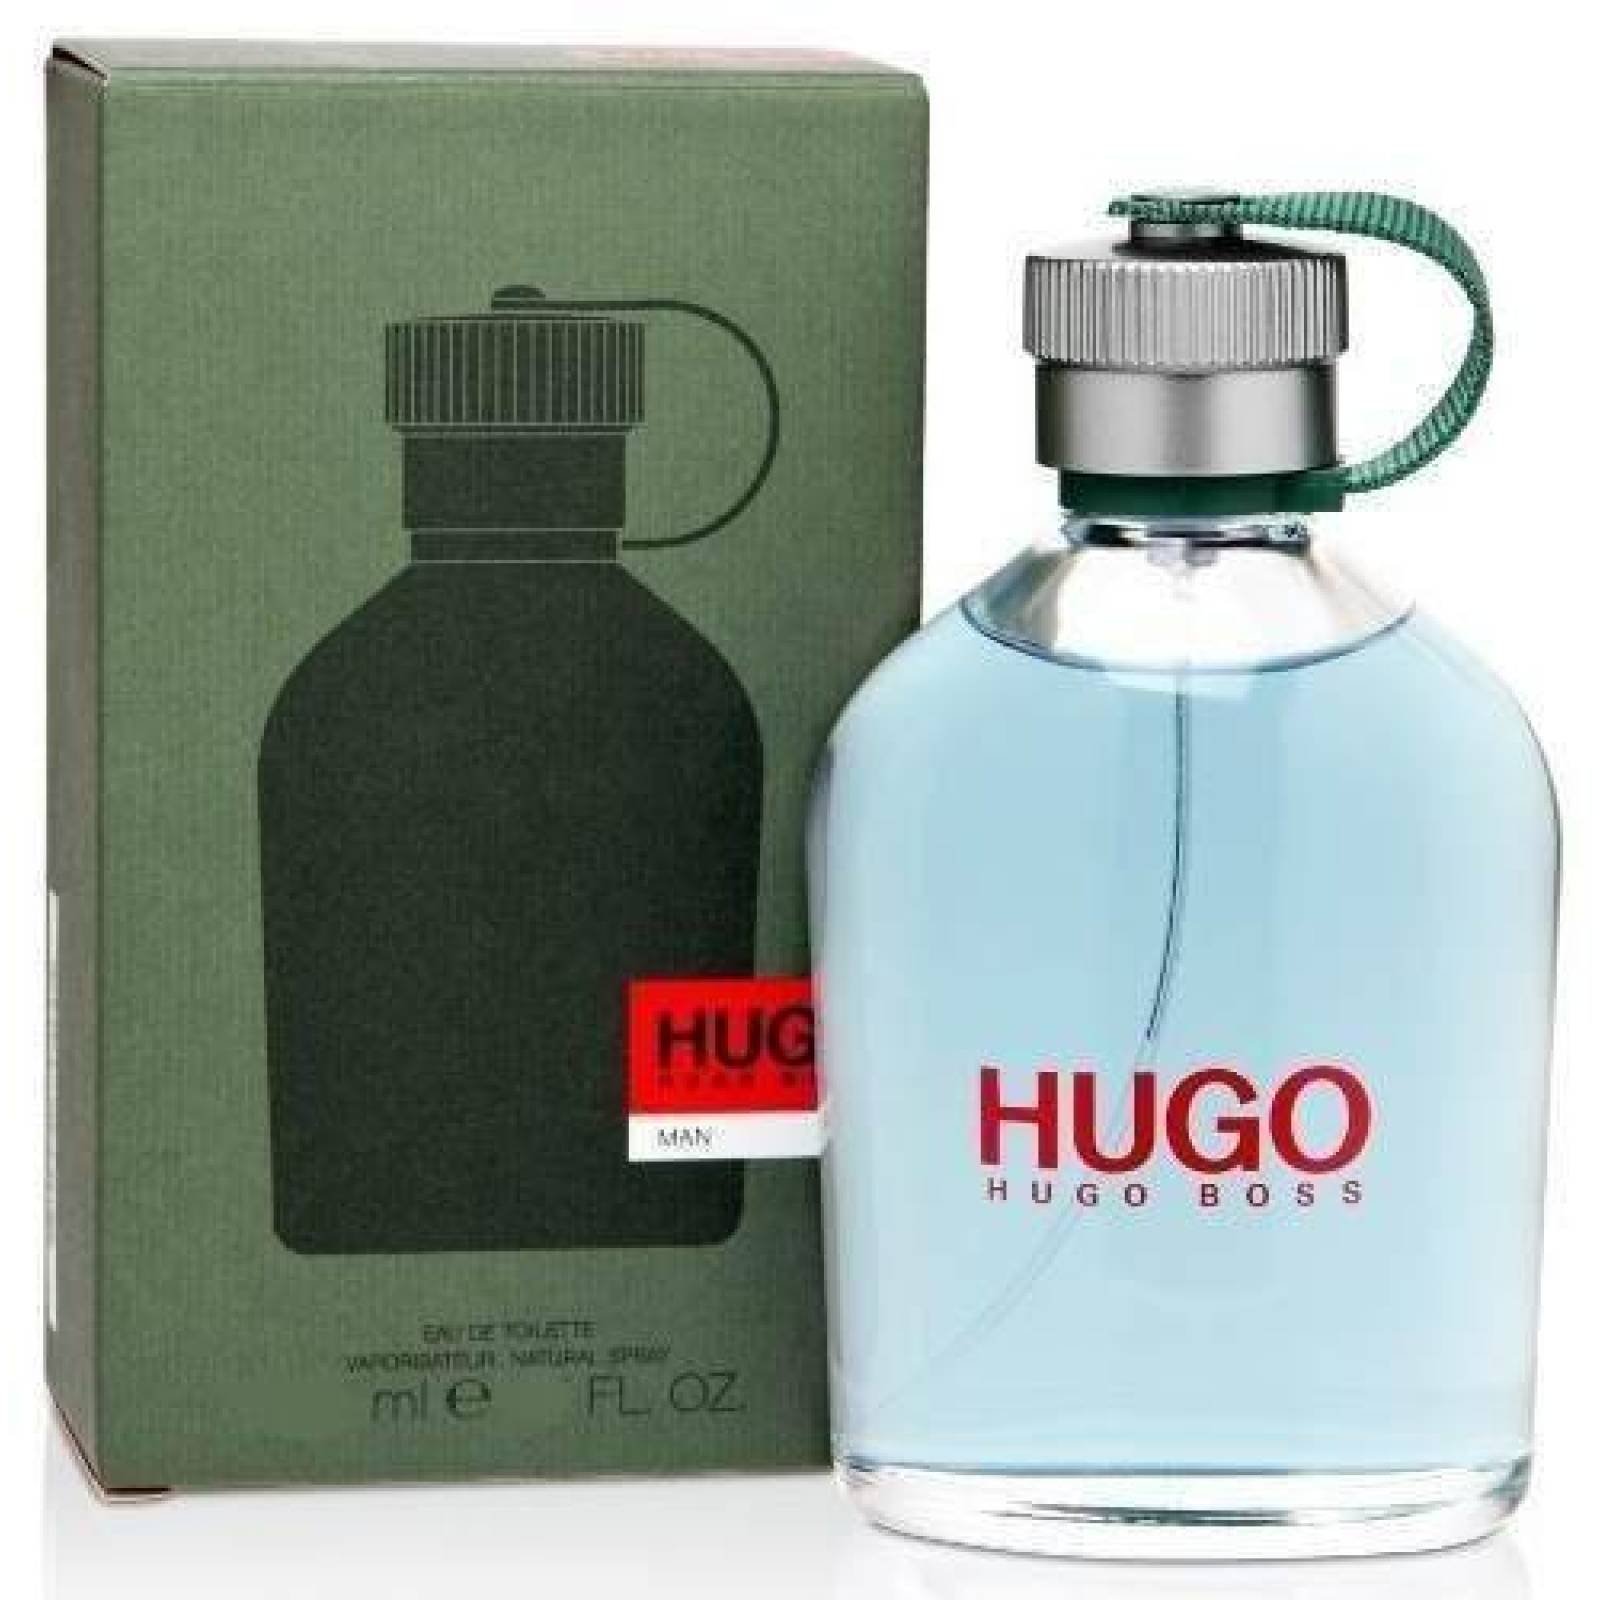 Hugo Caballero 0 Ml Hugo Boss Edt Spray Perfume Original